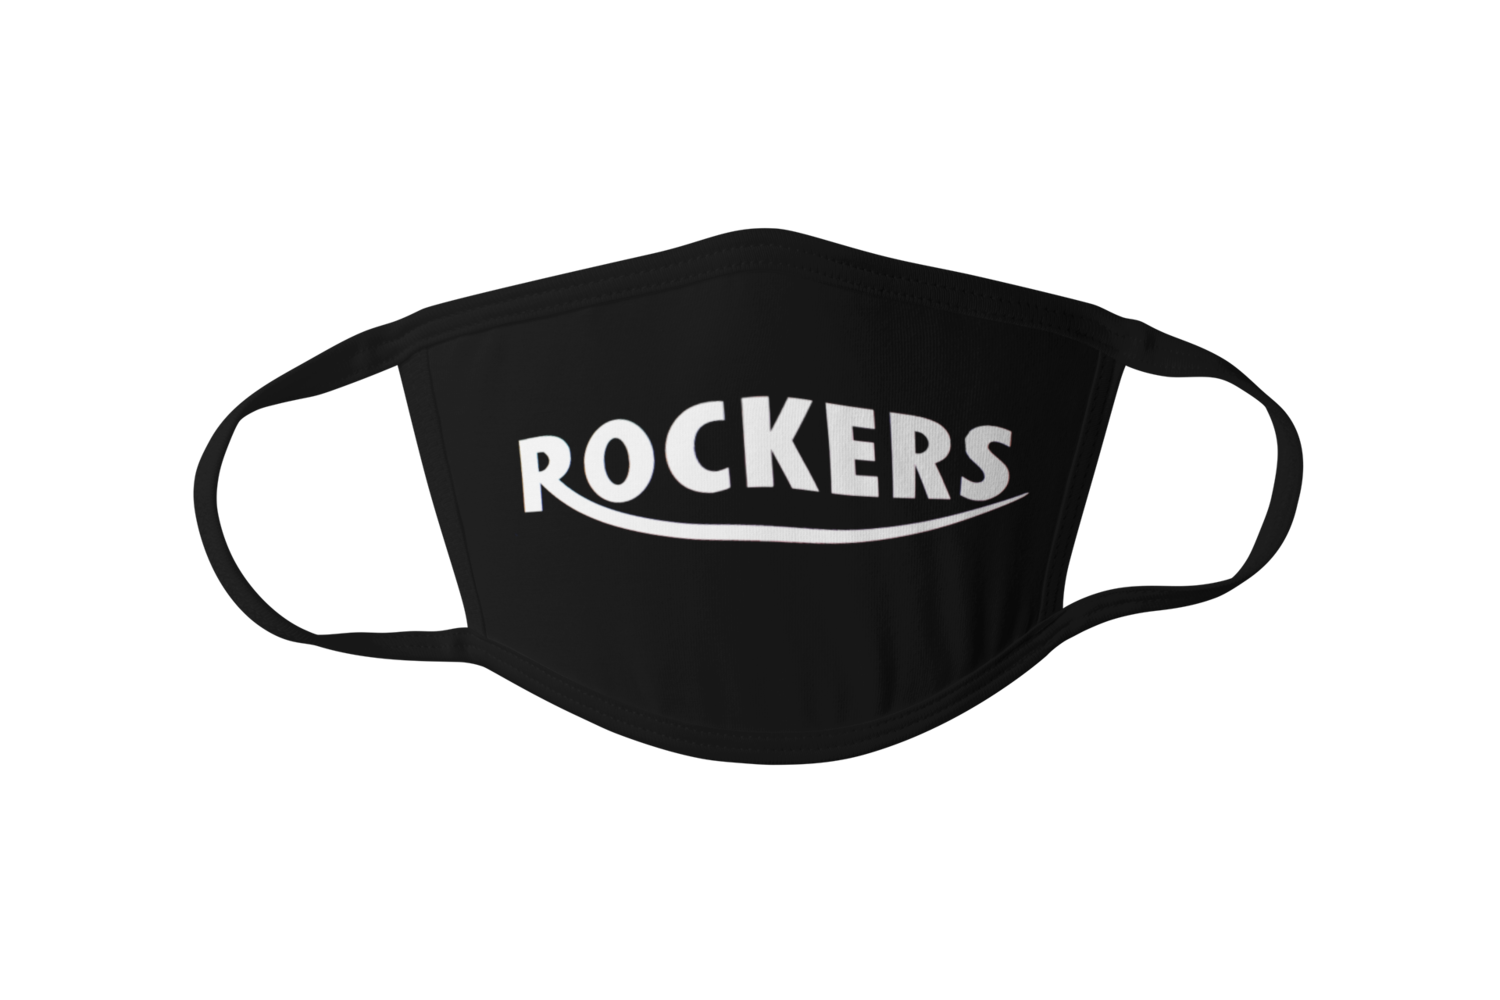 Rockers logo Mask